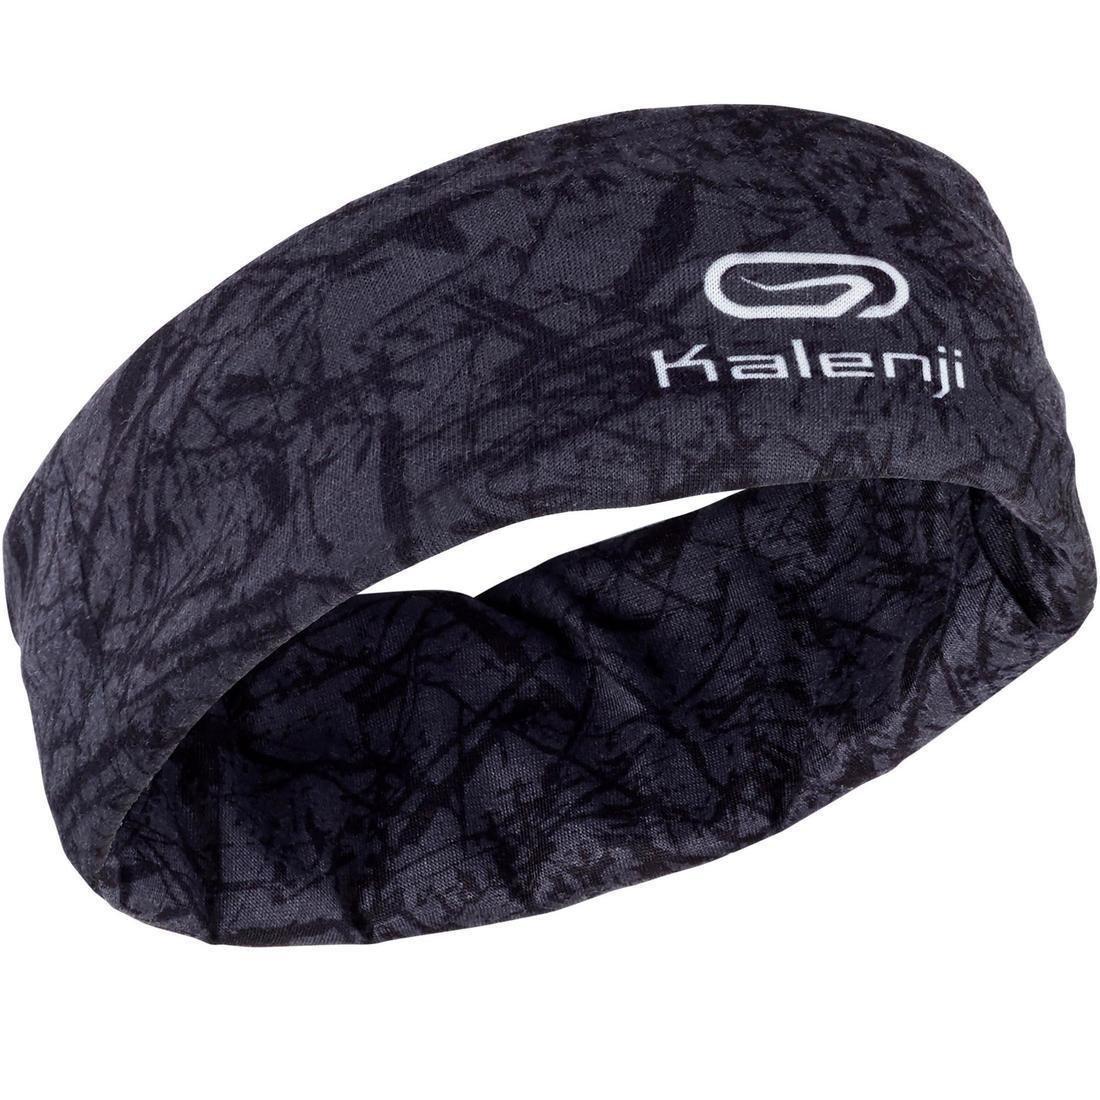 KIPRUN - Multi-Purpose Lightweight Headband, Black